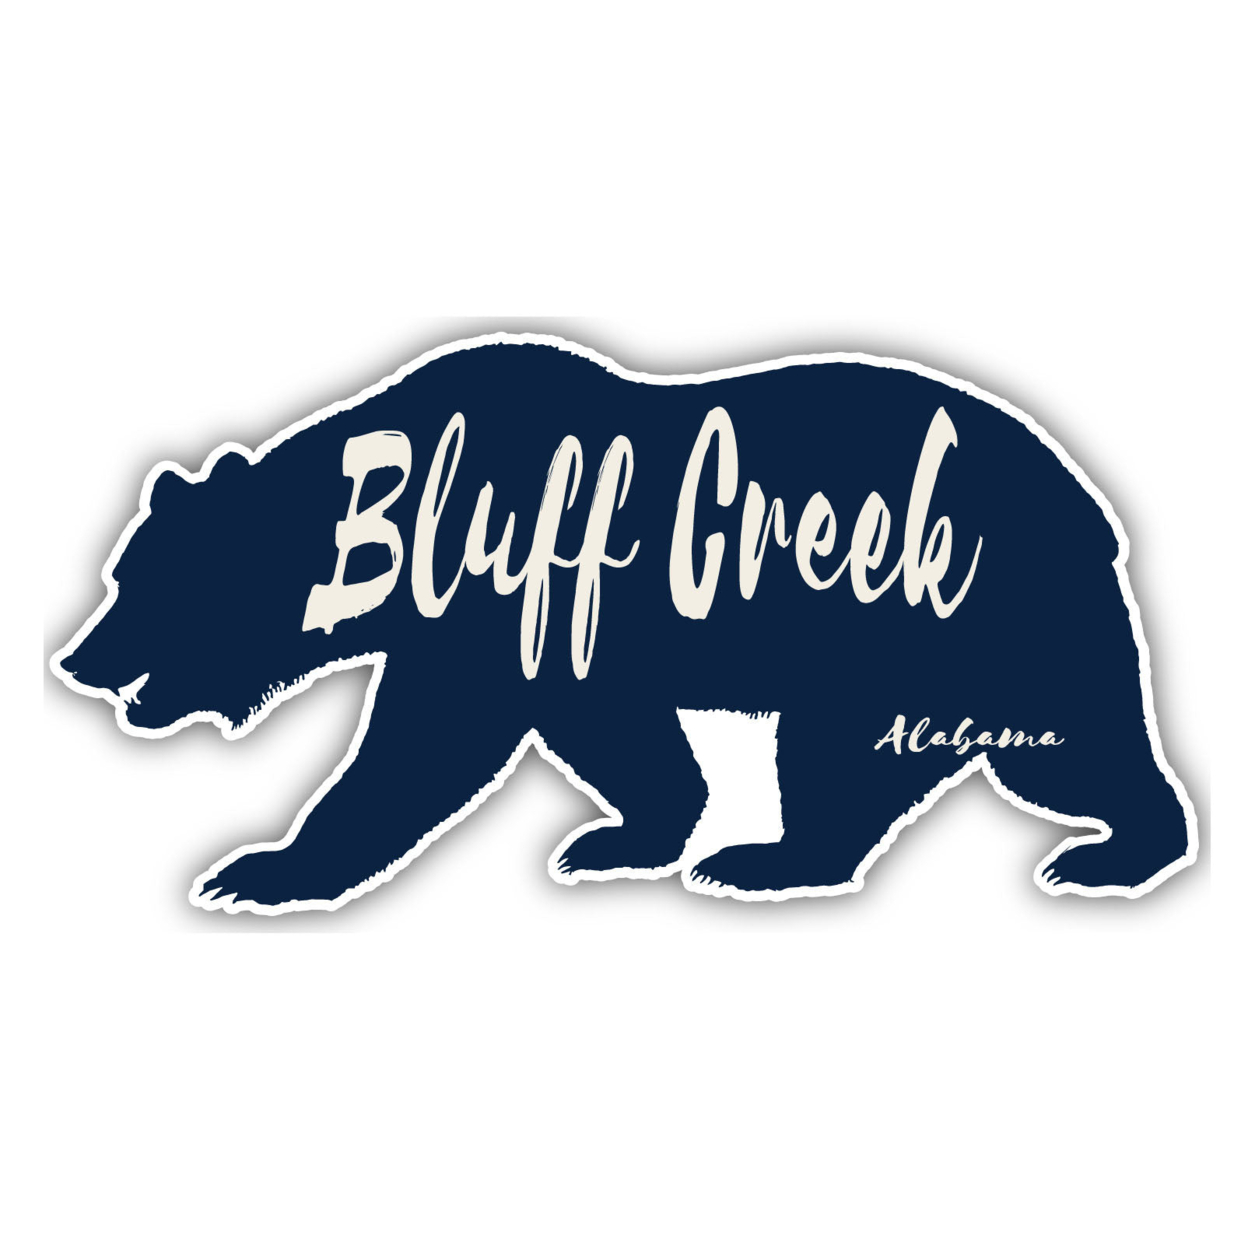 Bluff Creek Alabama Souvenir Decorative Stickers (Choose Theme And Size) - 4-Pack, 6-Inch, Bear